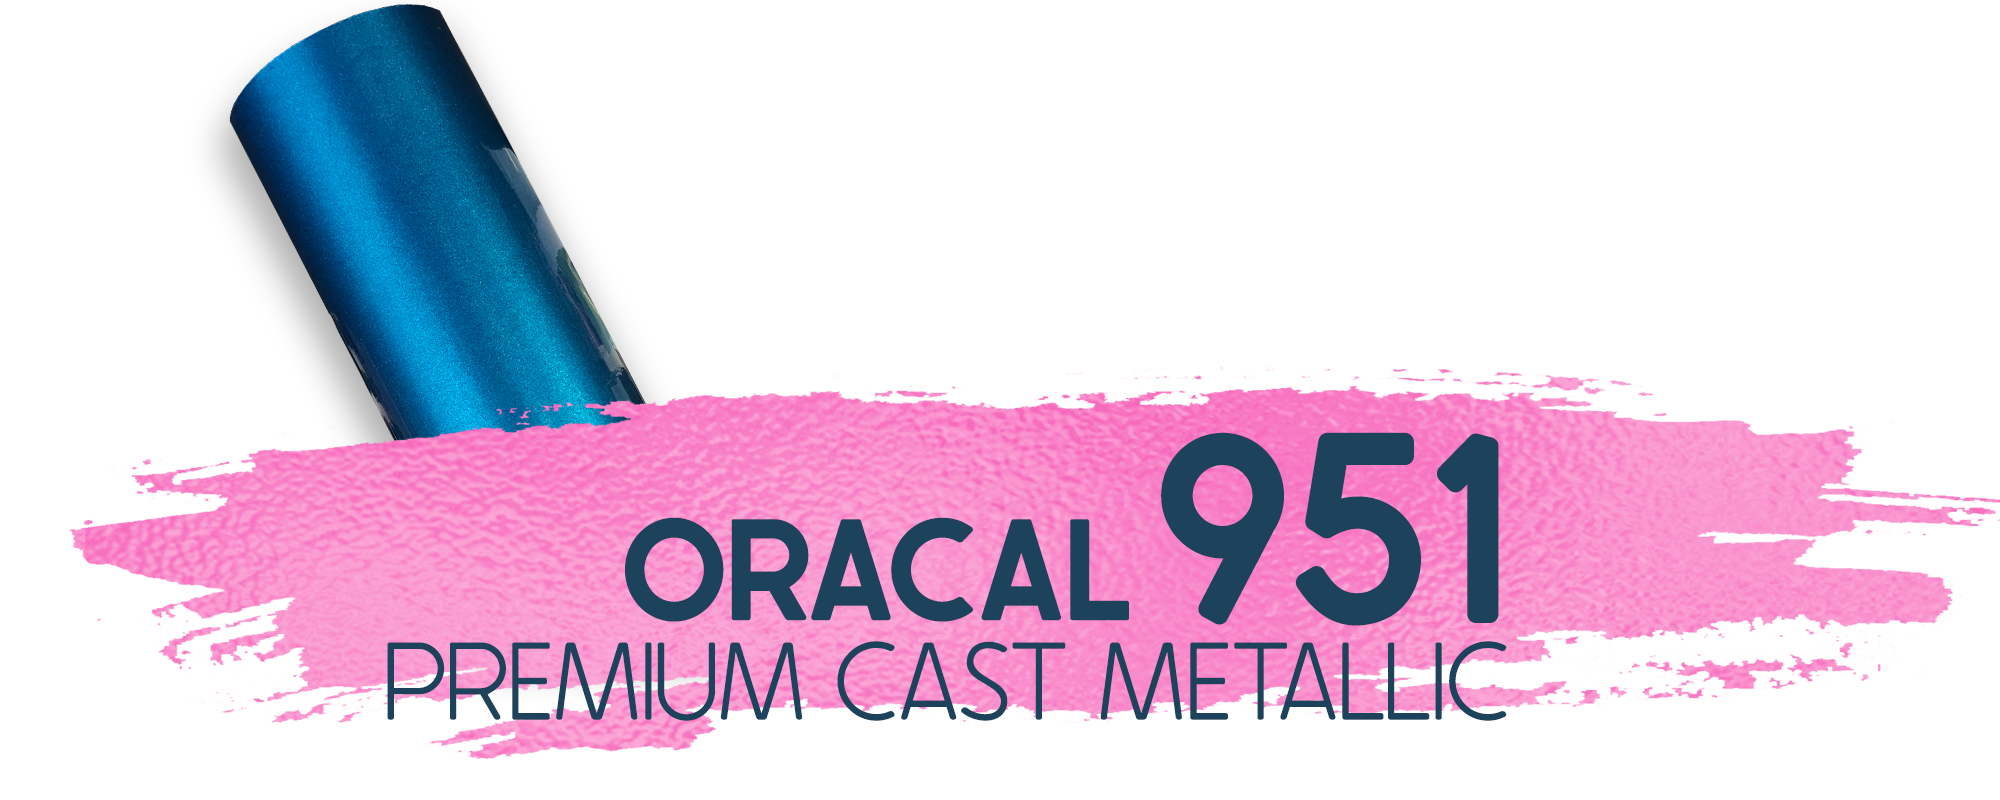 Oracal 951 Metallic Banner